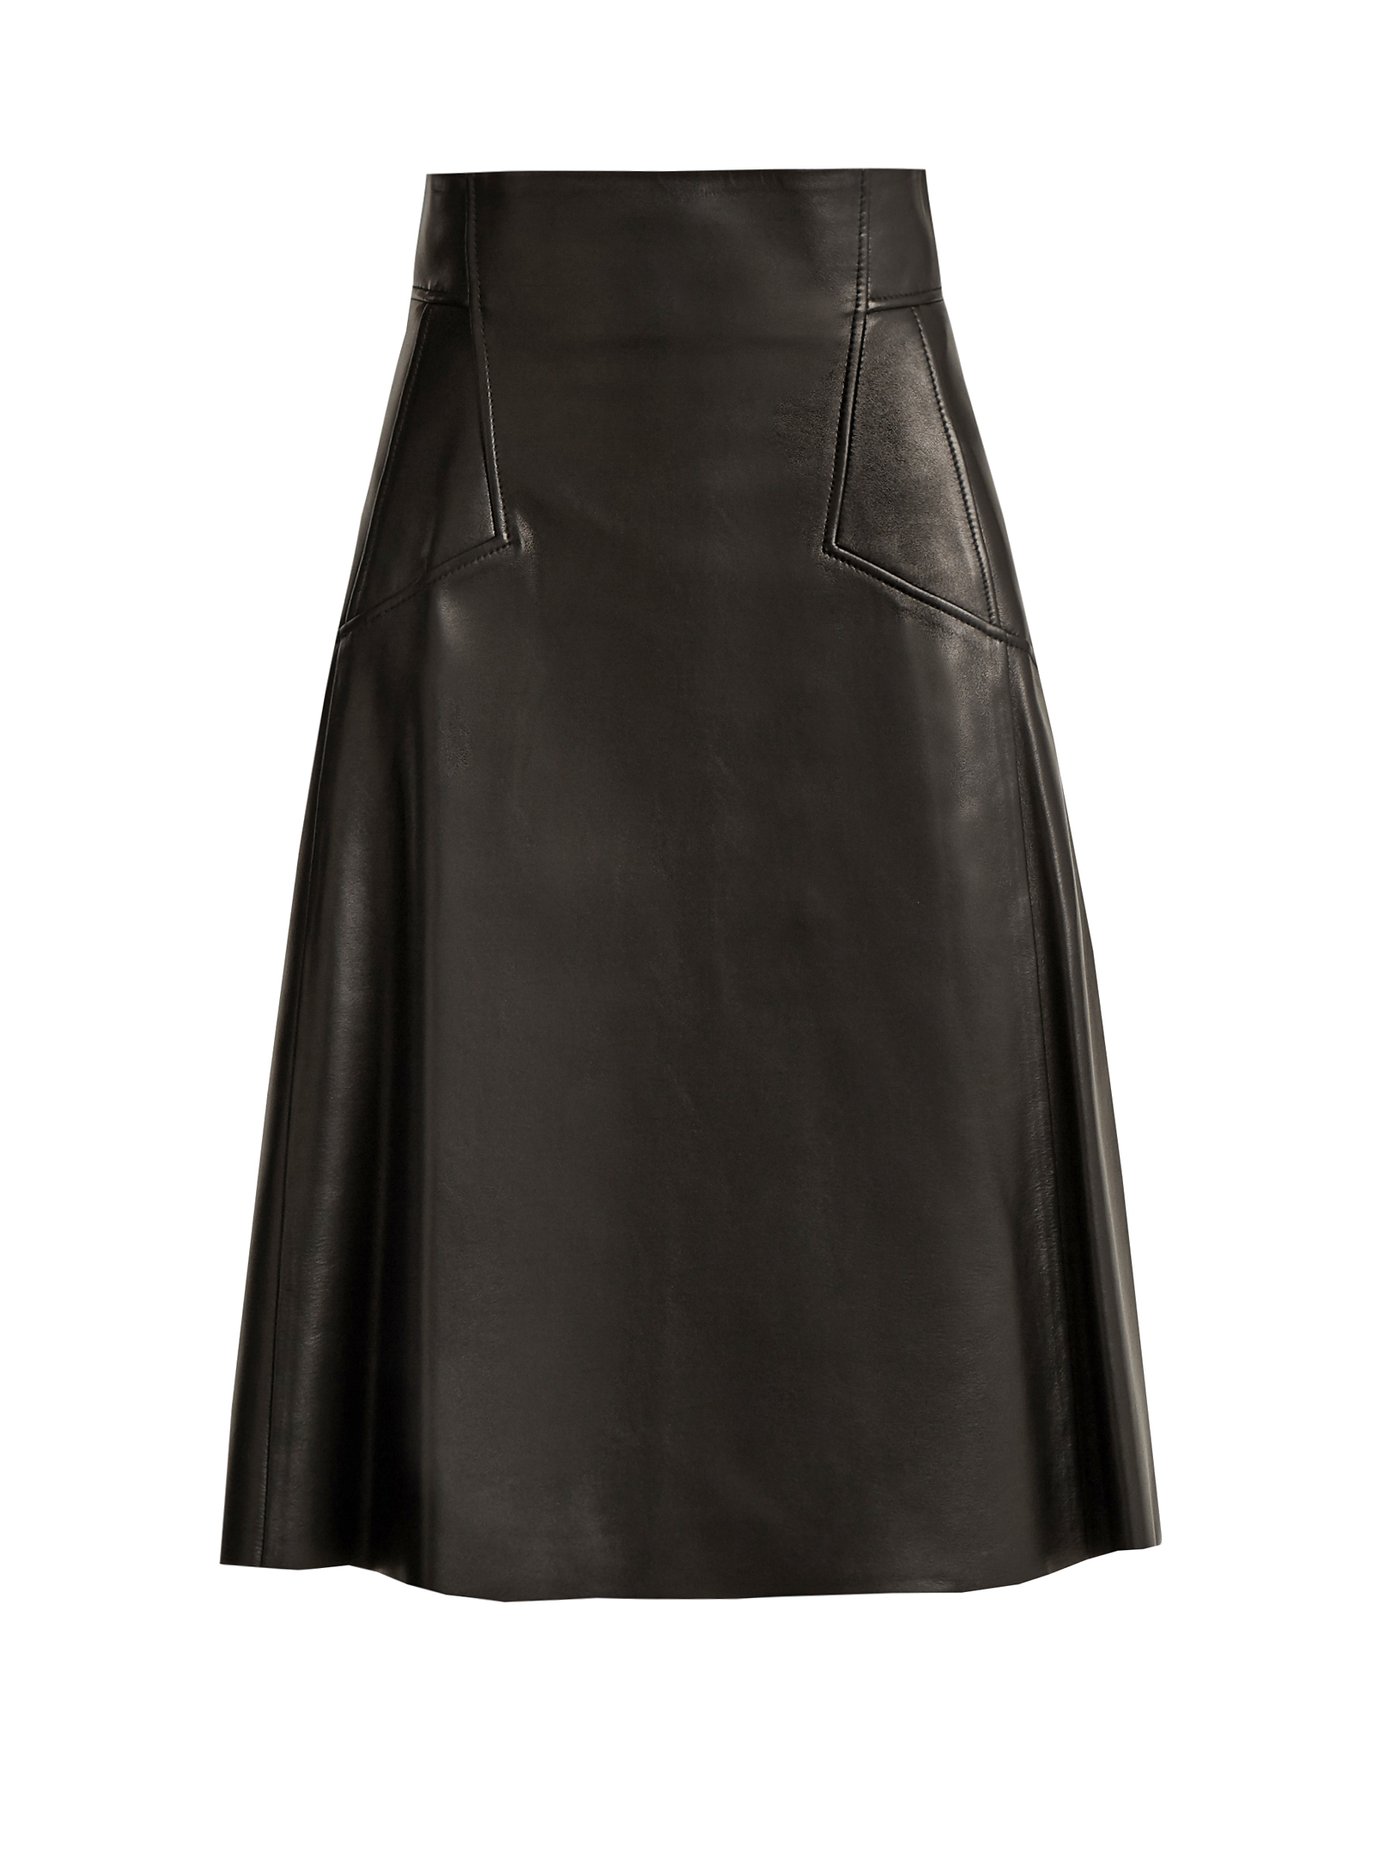 alexander mcqueen leather skirt